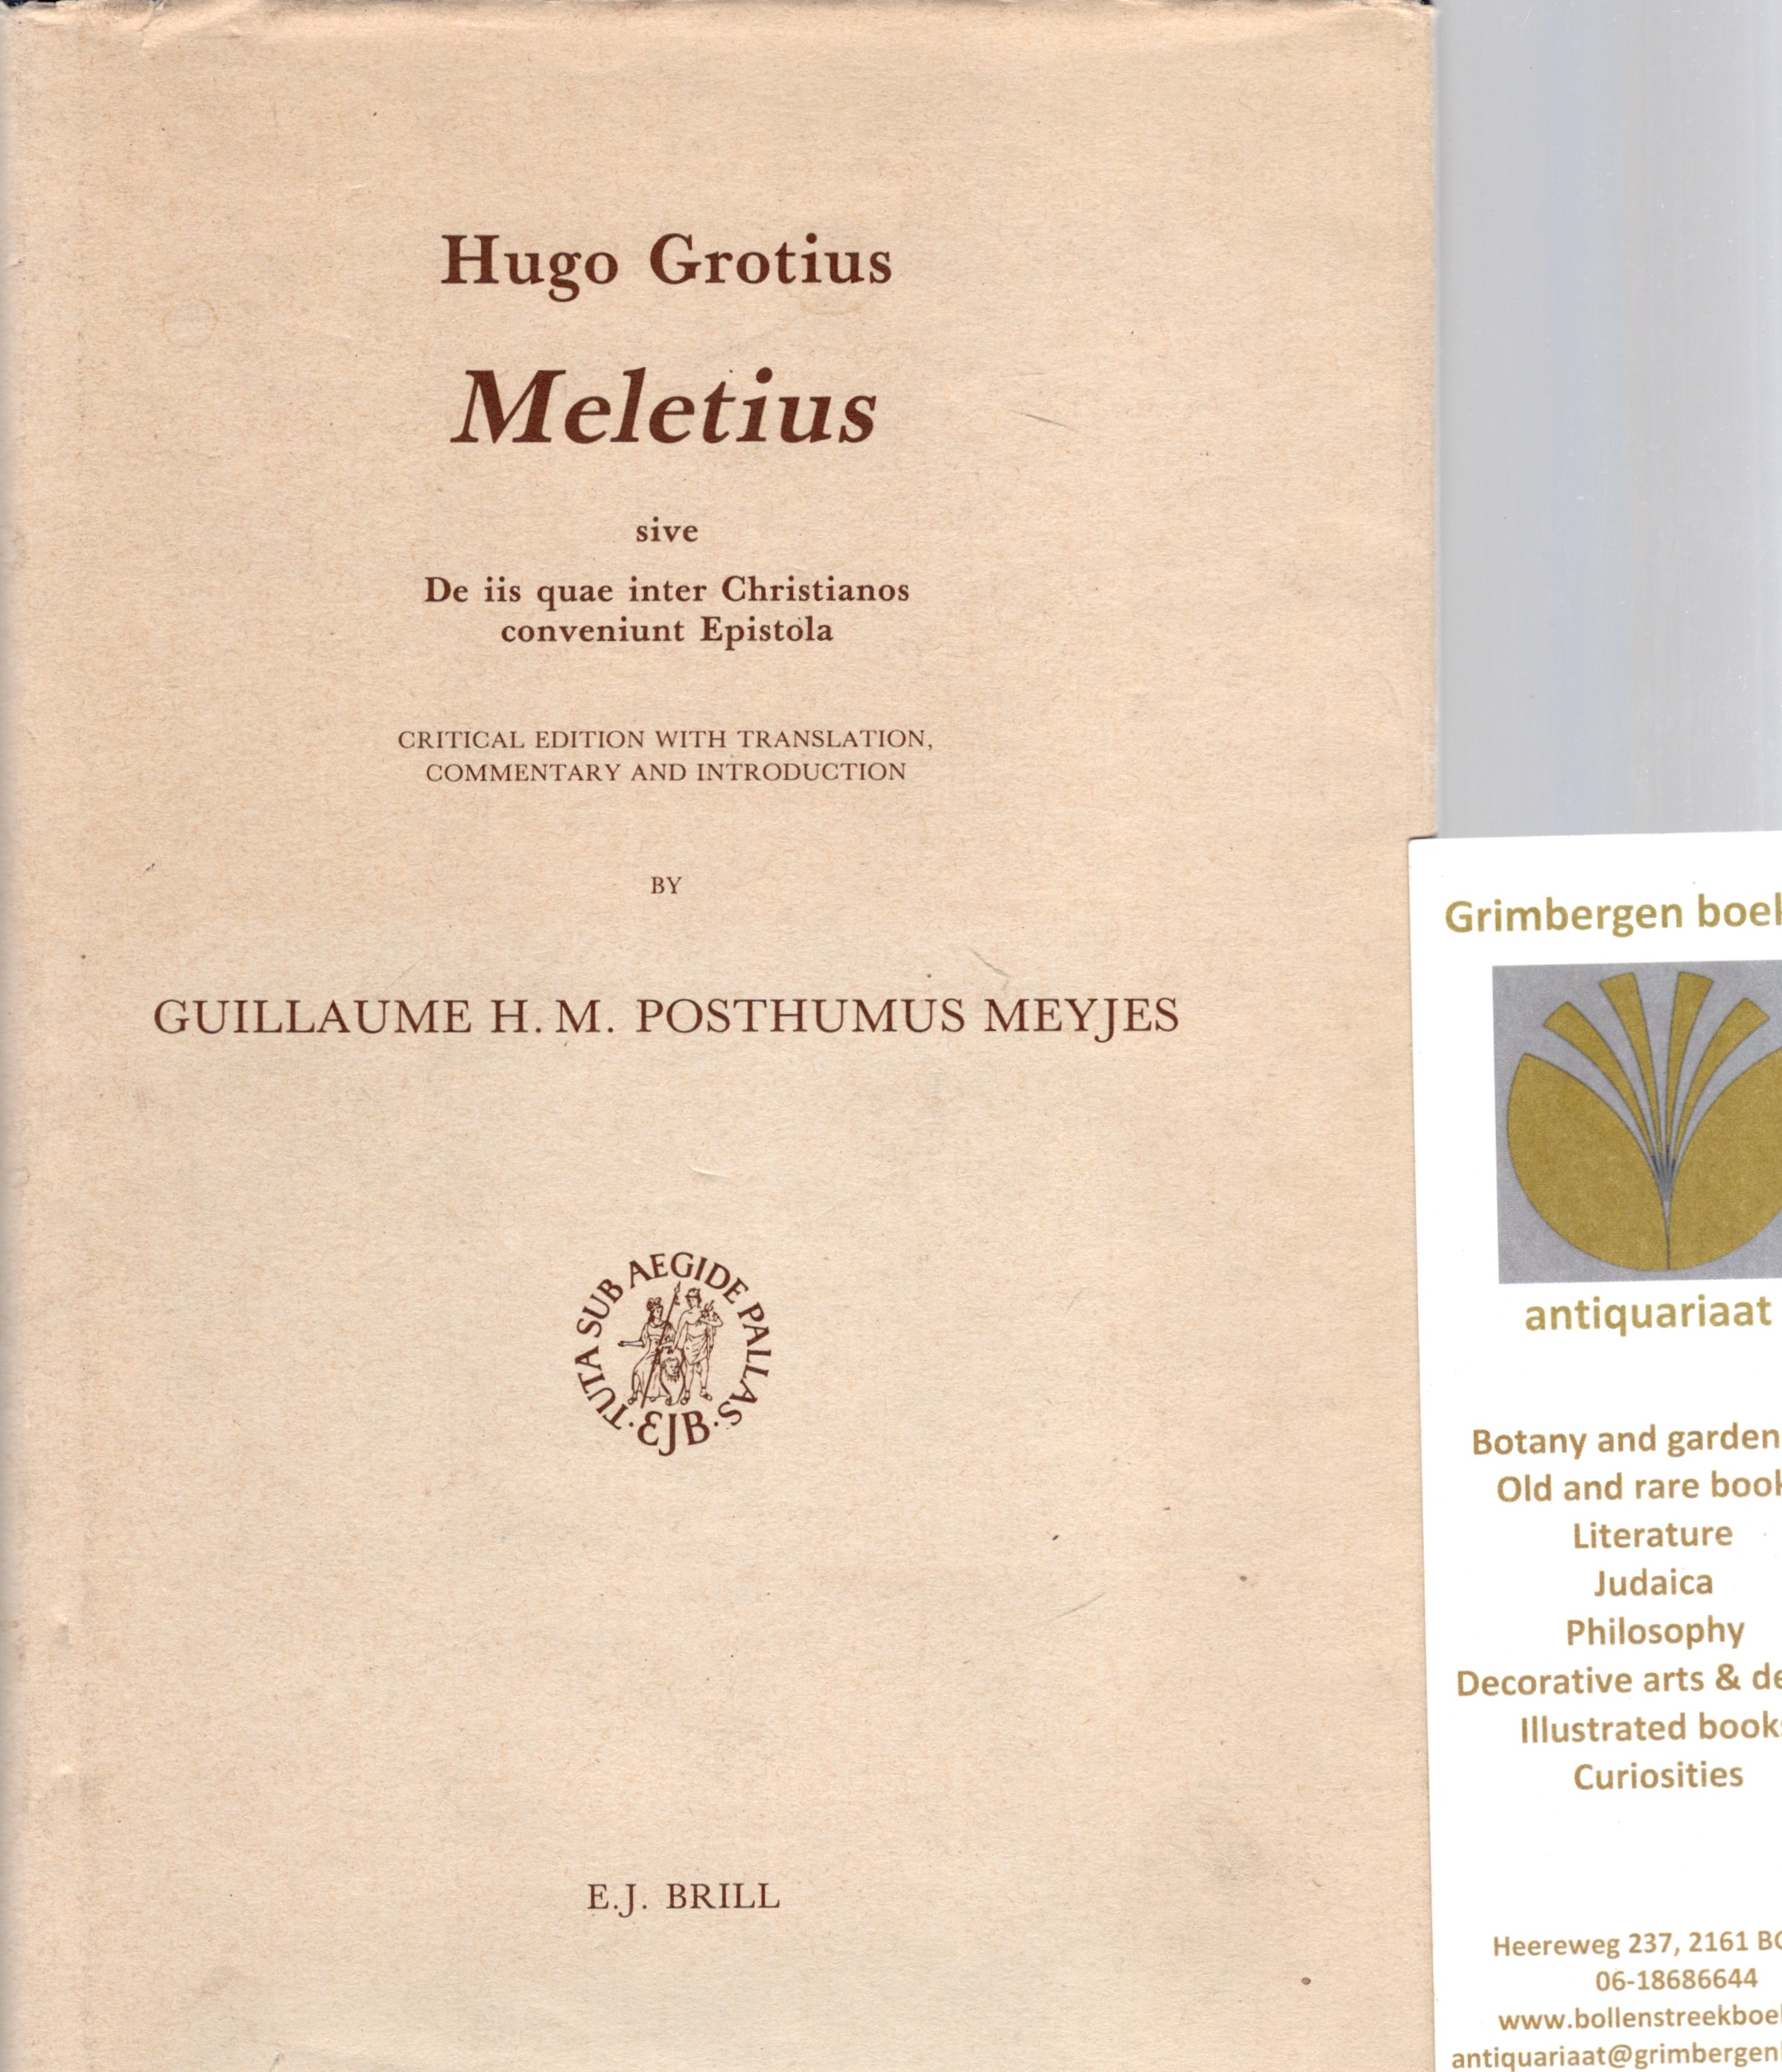 Hugo Grotius - Meletius, sive de iis quae inter Christianos conveniunt epistola Critical Edition with Translation, Commentary and Introduction by G.H.M. Posthumus Meyjes - Grotius, Hugo [Hugo de Groot]